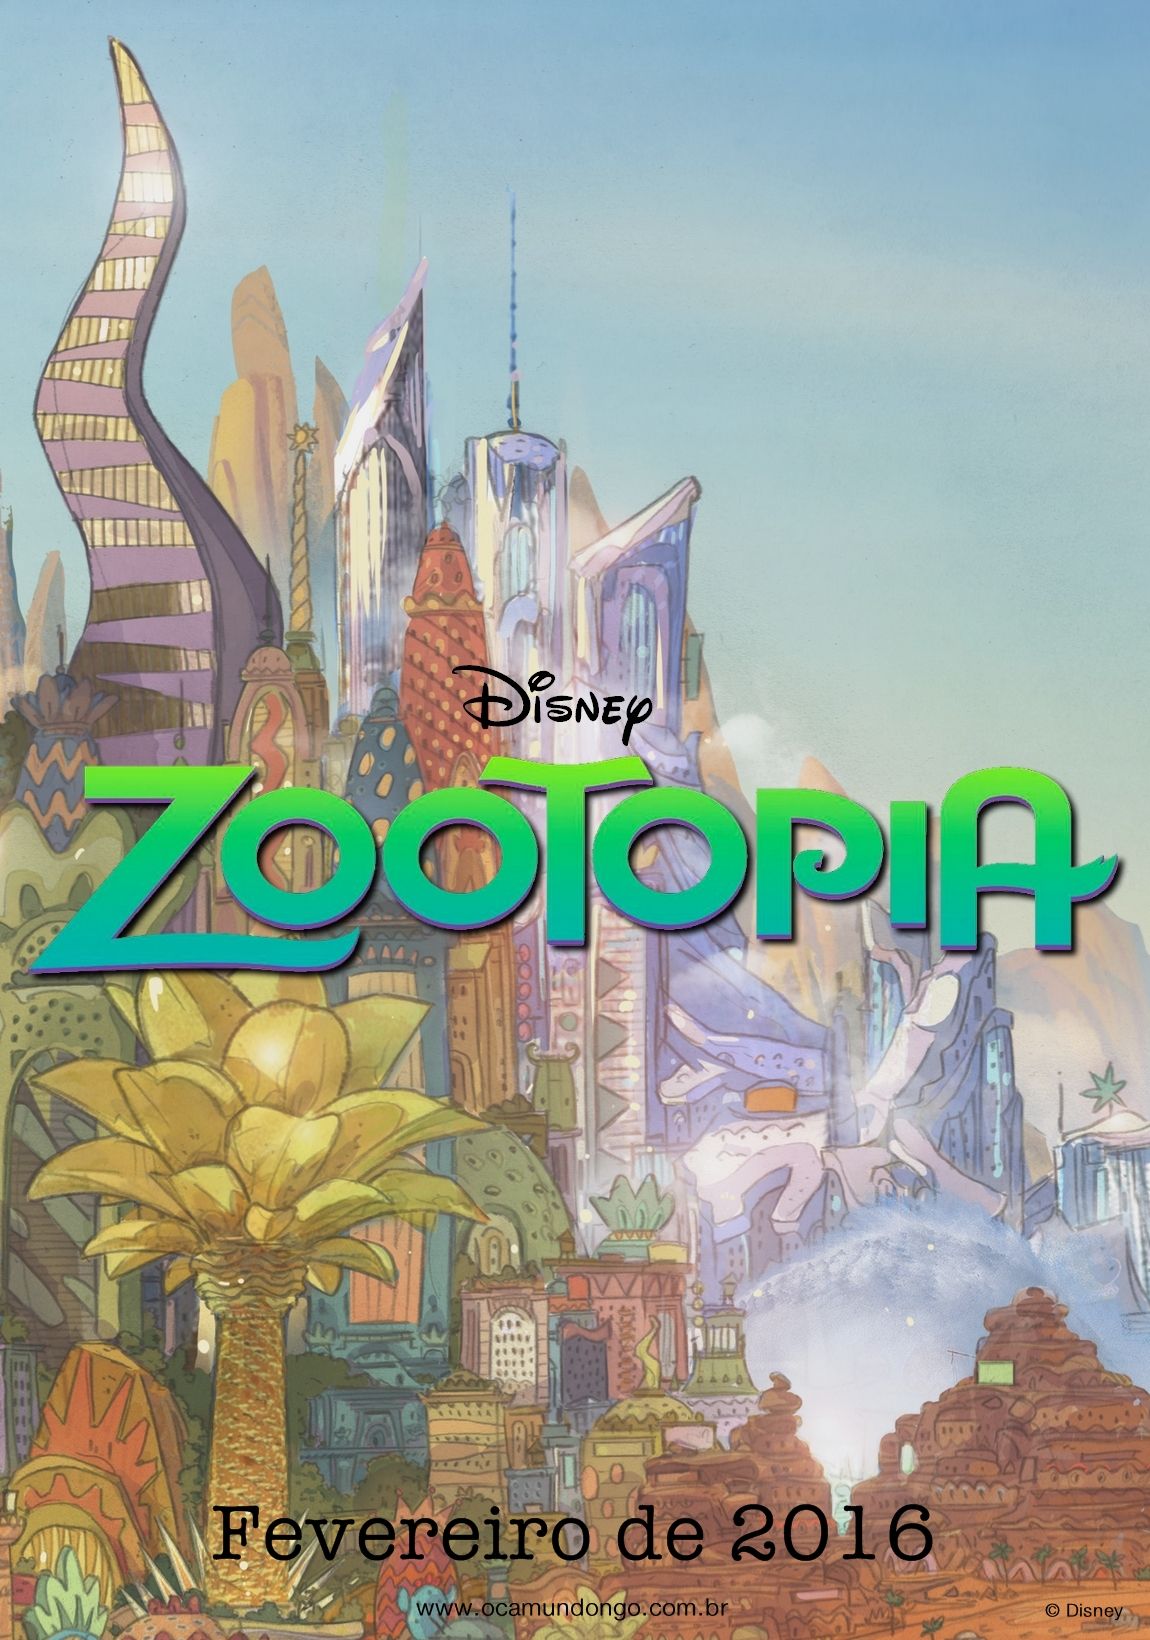 zootopia-poster-metropole-conceitual-camundongo